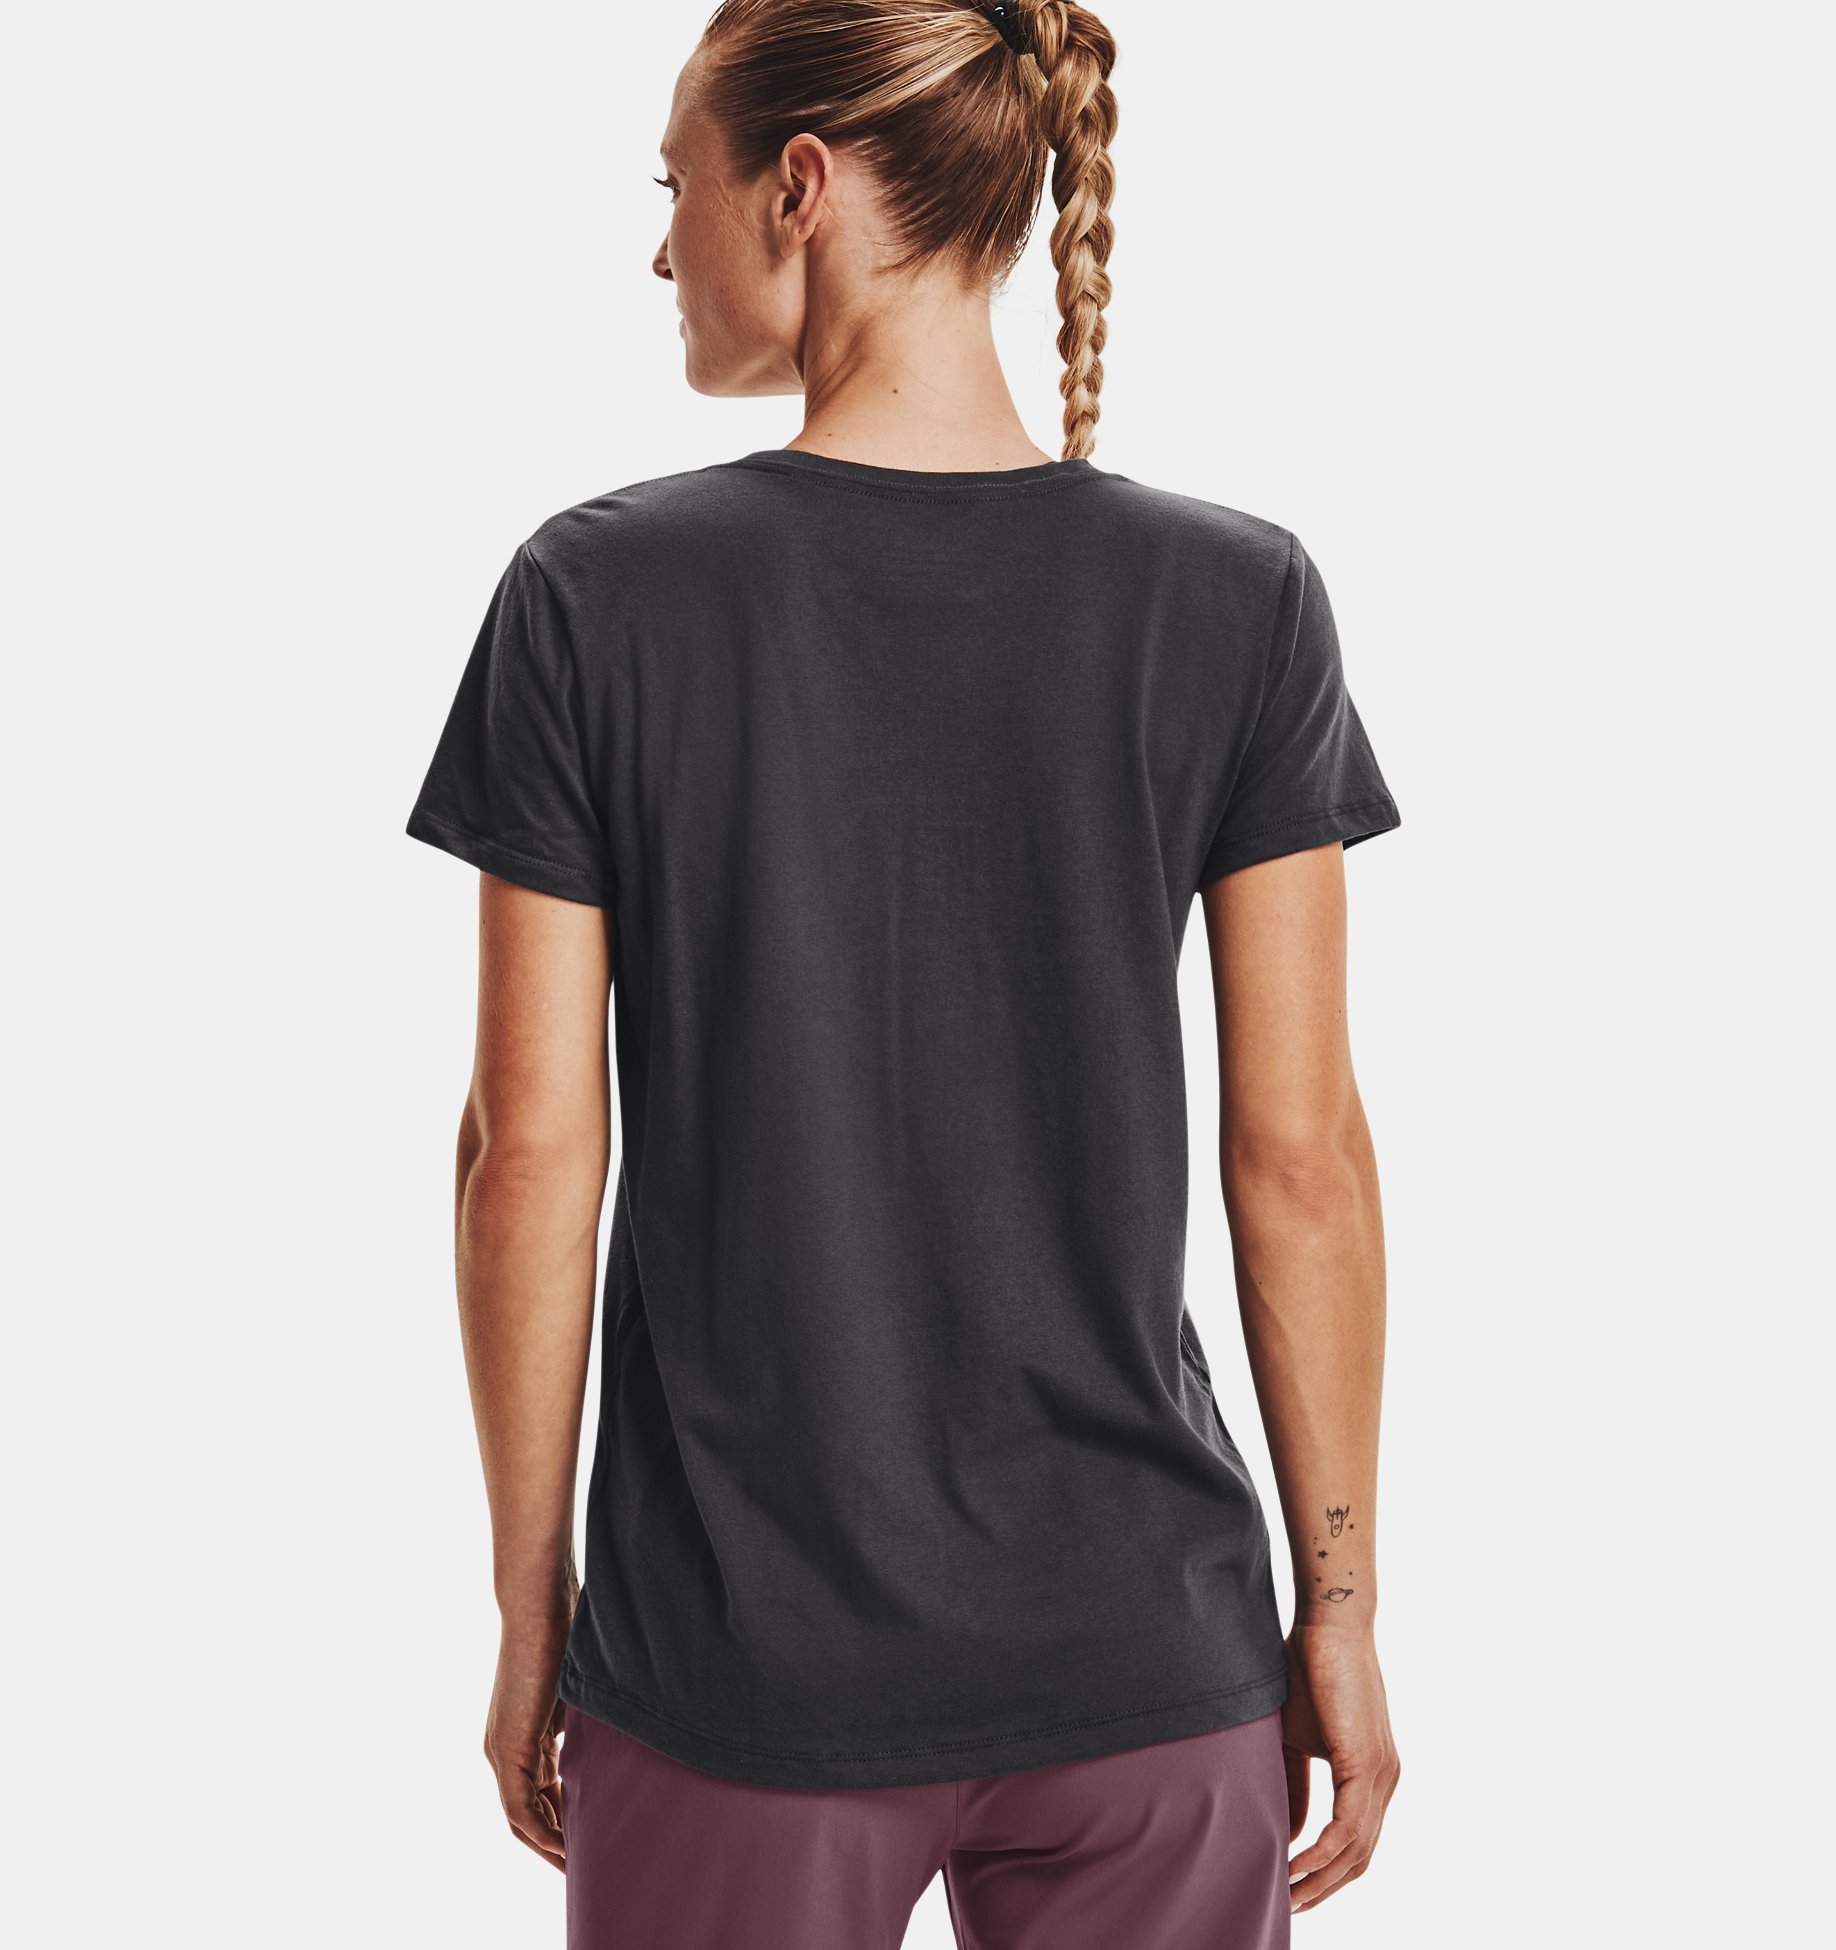 Under Armour Women's Graphic Script Logo Fashion Short-Sleeve T-Shirt